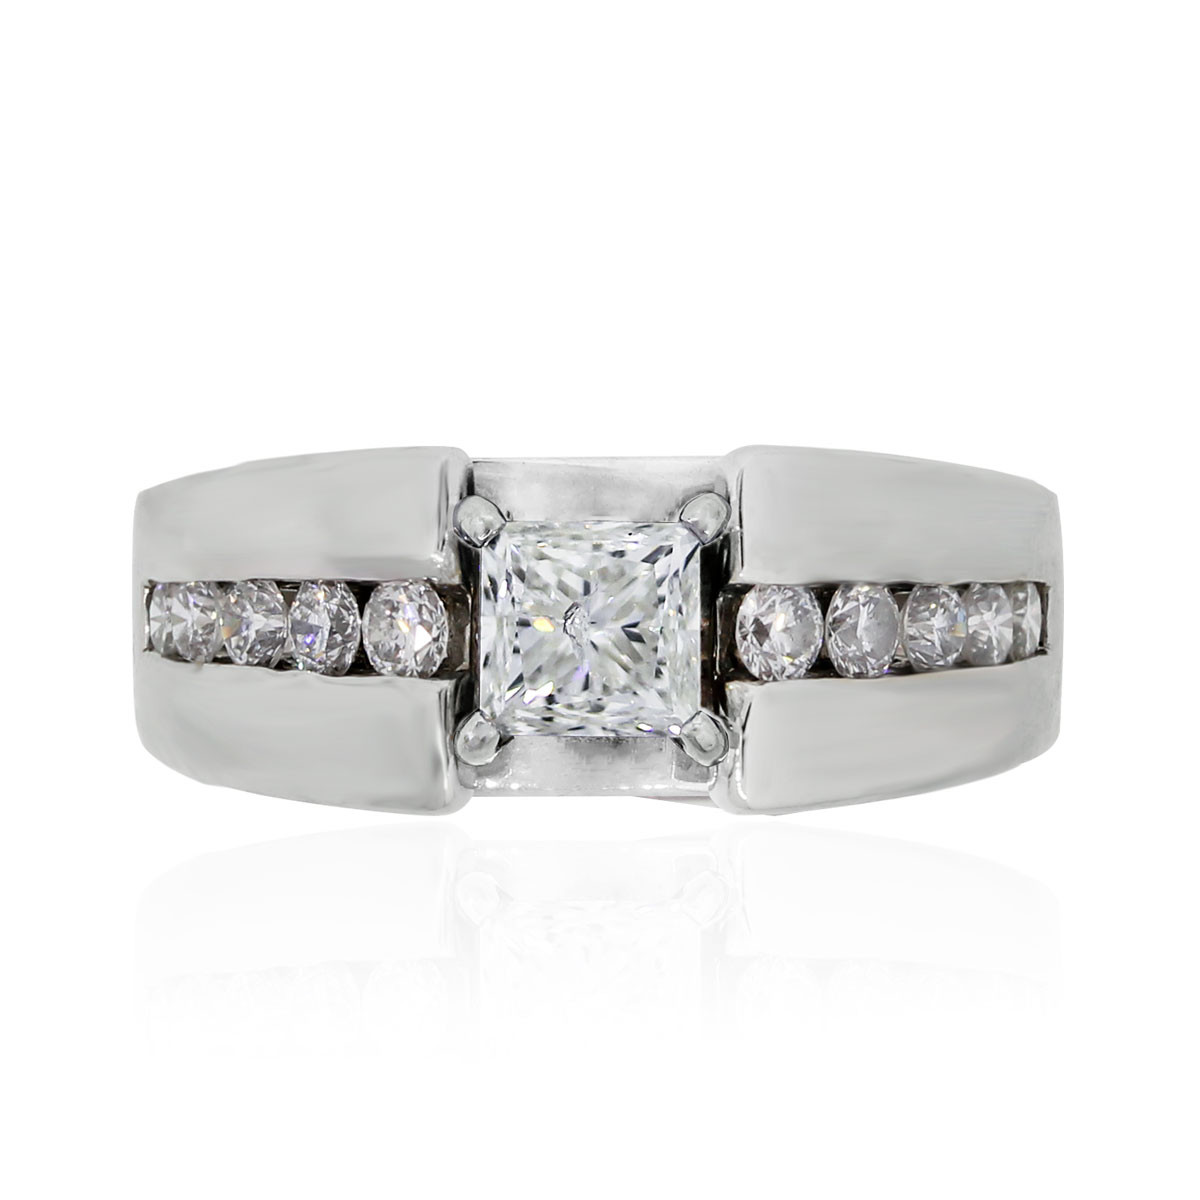 Princess Cut Diamond Engagement Rings White Gold
 14k White Gold 95ct Princess Cut Diamond Engagement Ring